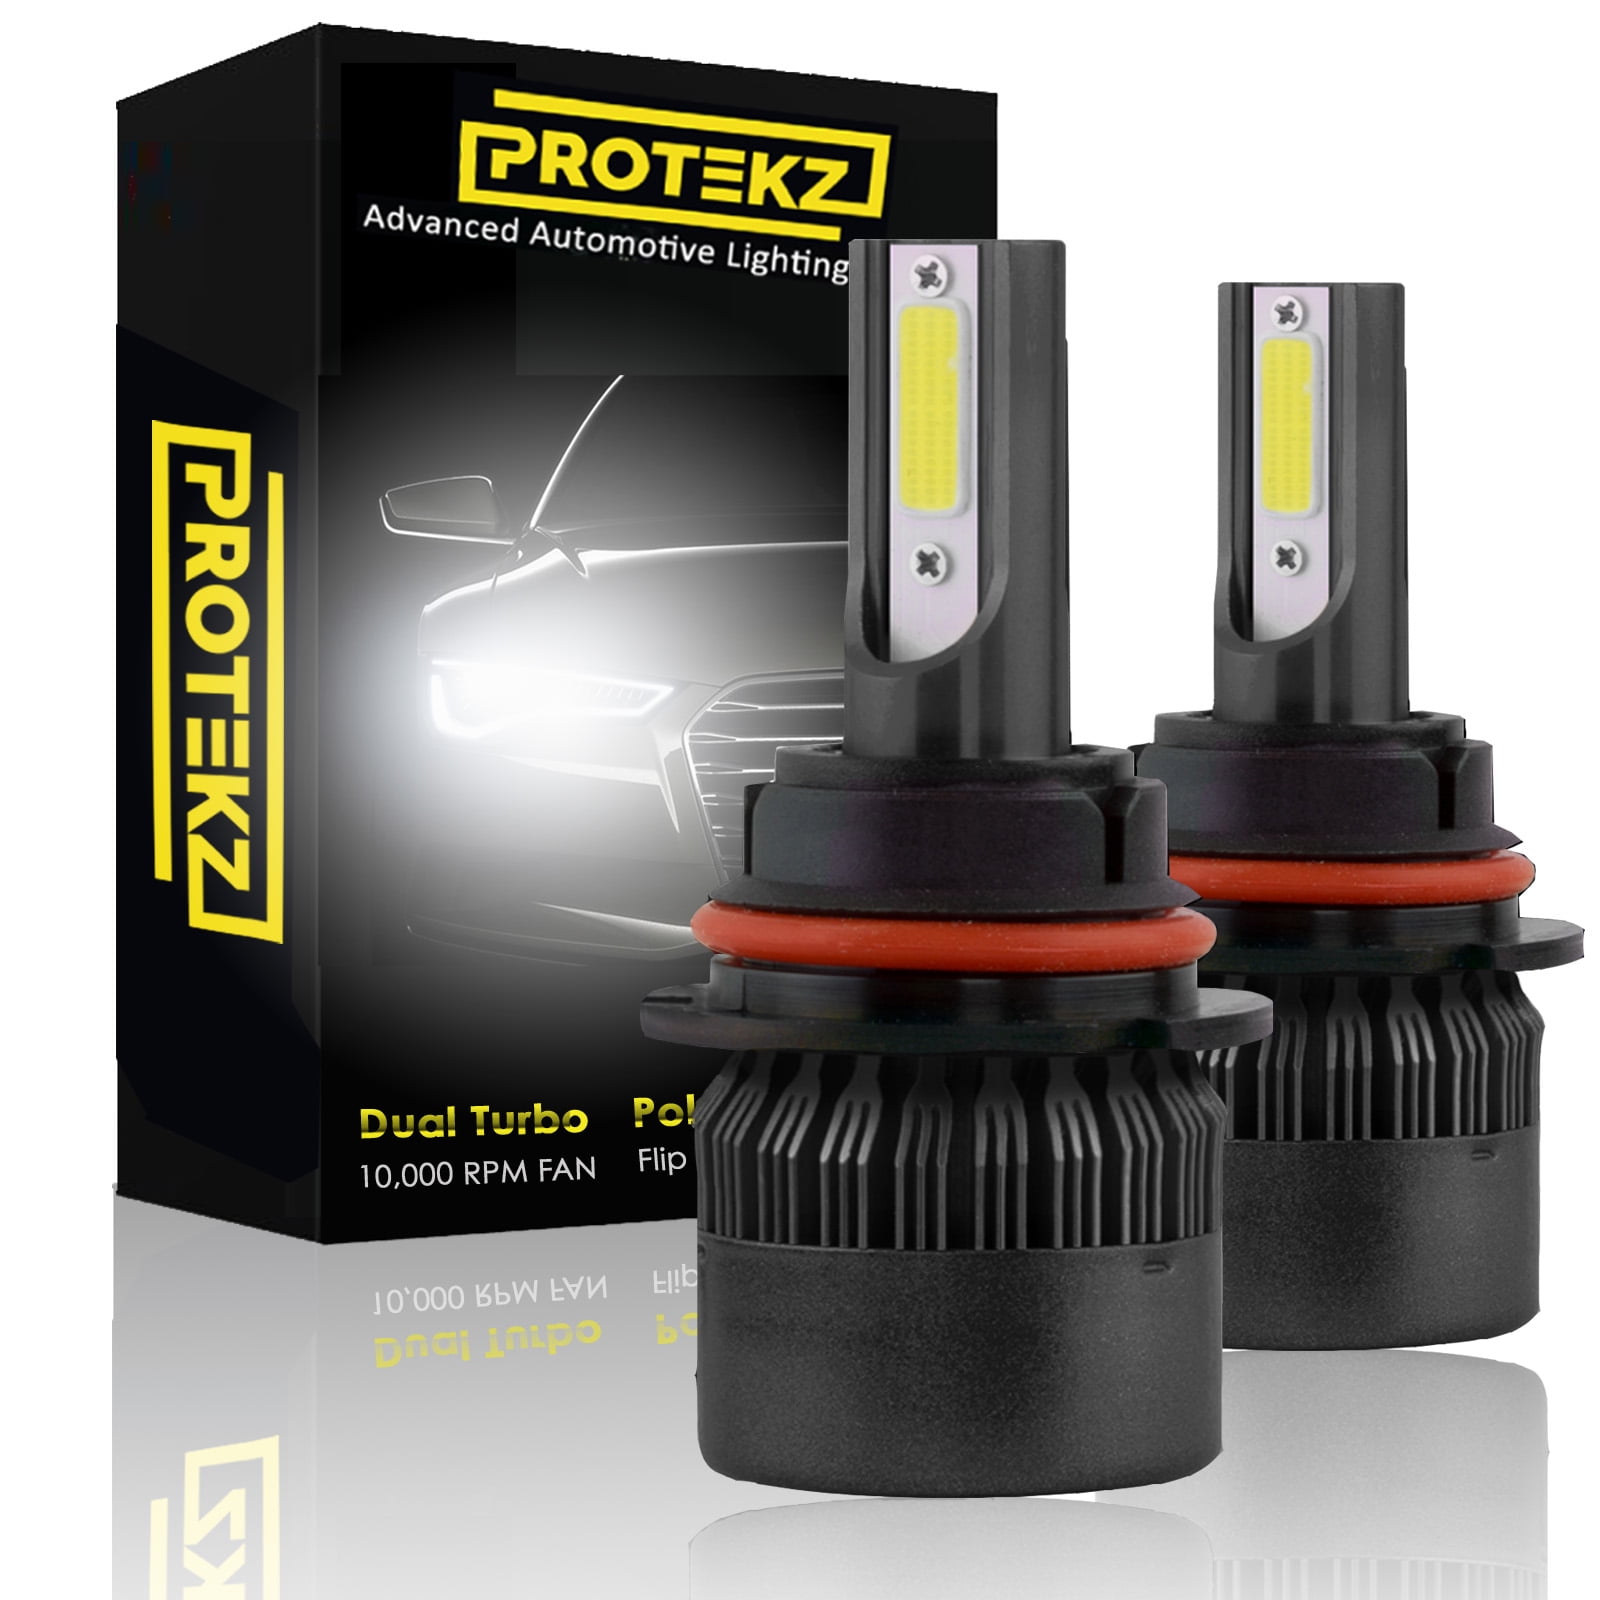 Protekz LED Headlight Kit 9006 Hb4 Fog Light for 2000-2006 BMW 3 SERIES COUPE